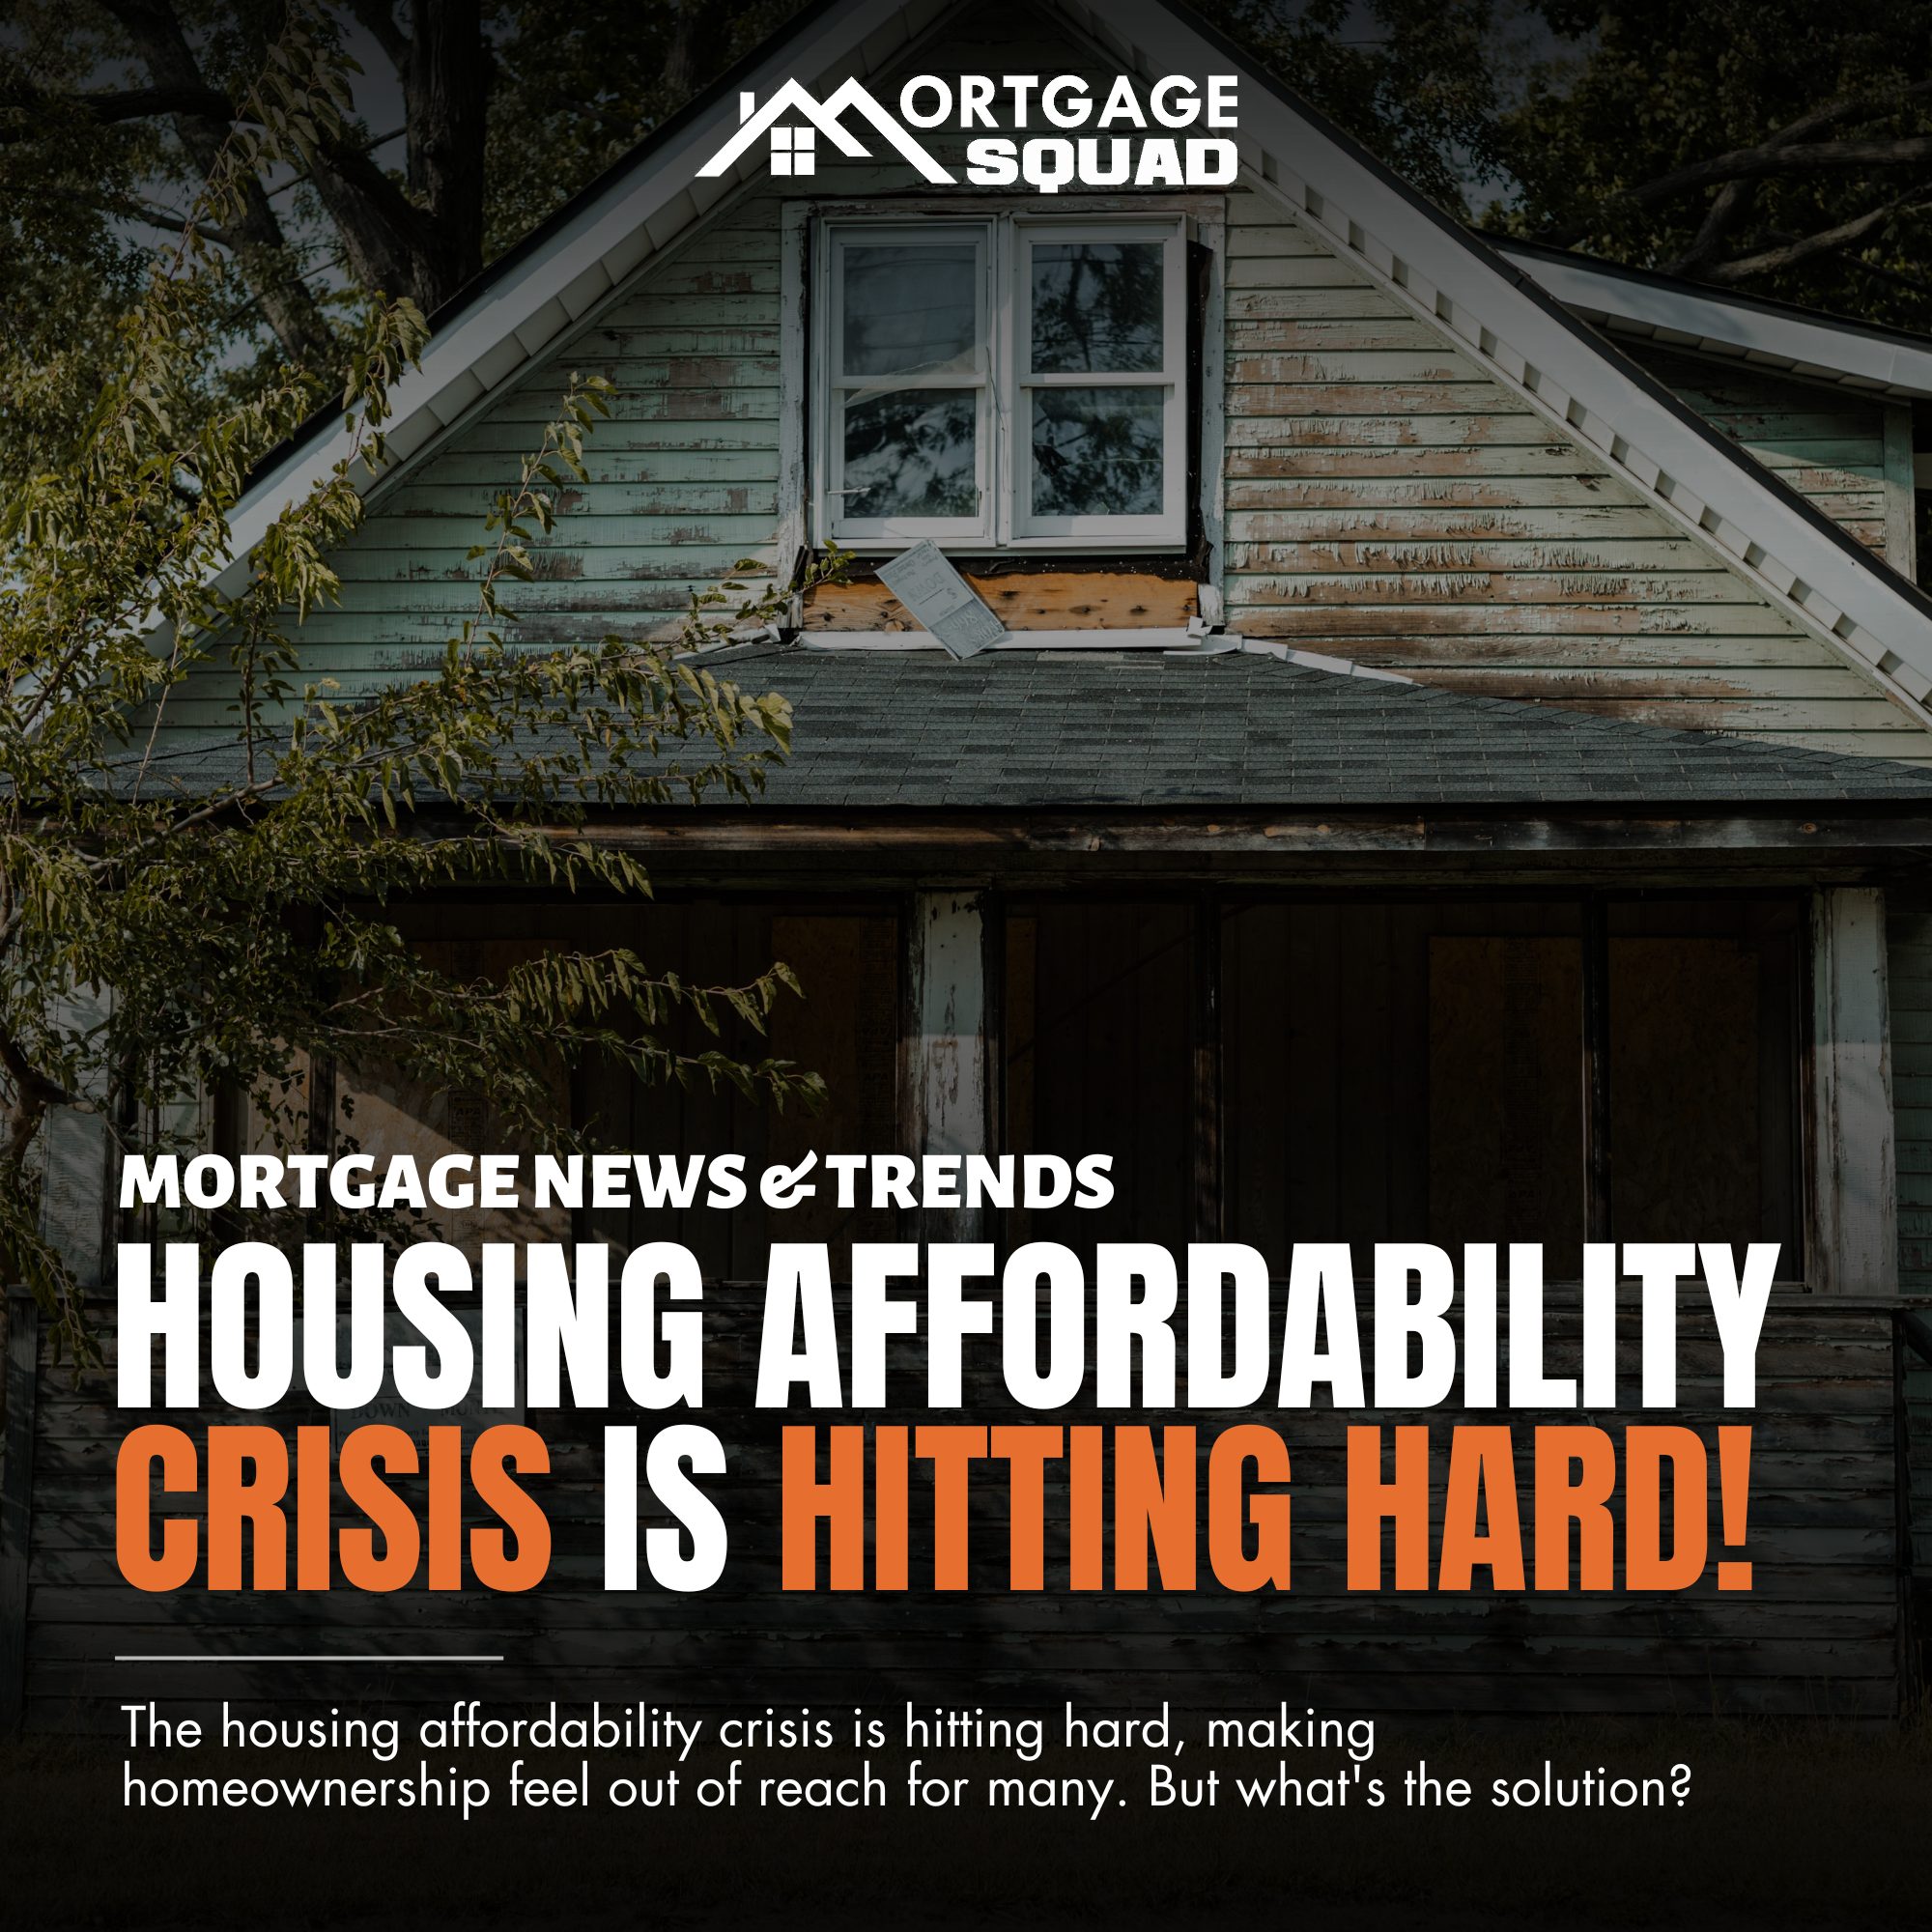 Housing Affordability Crisis